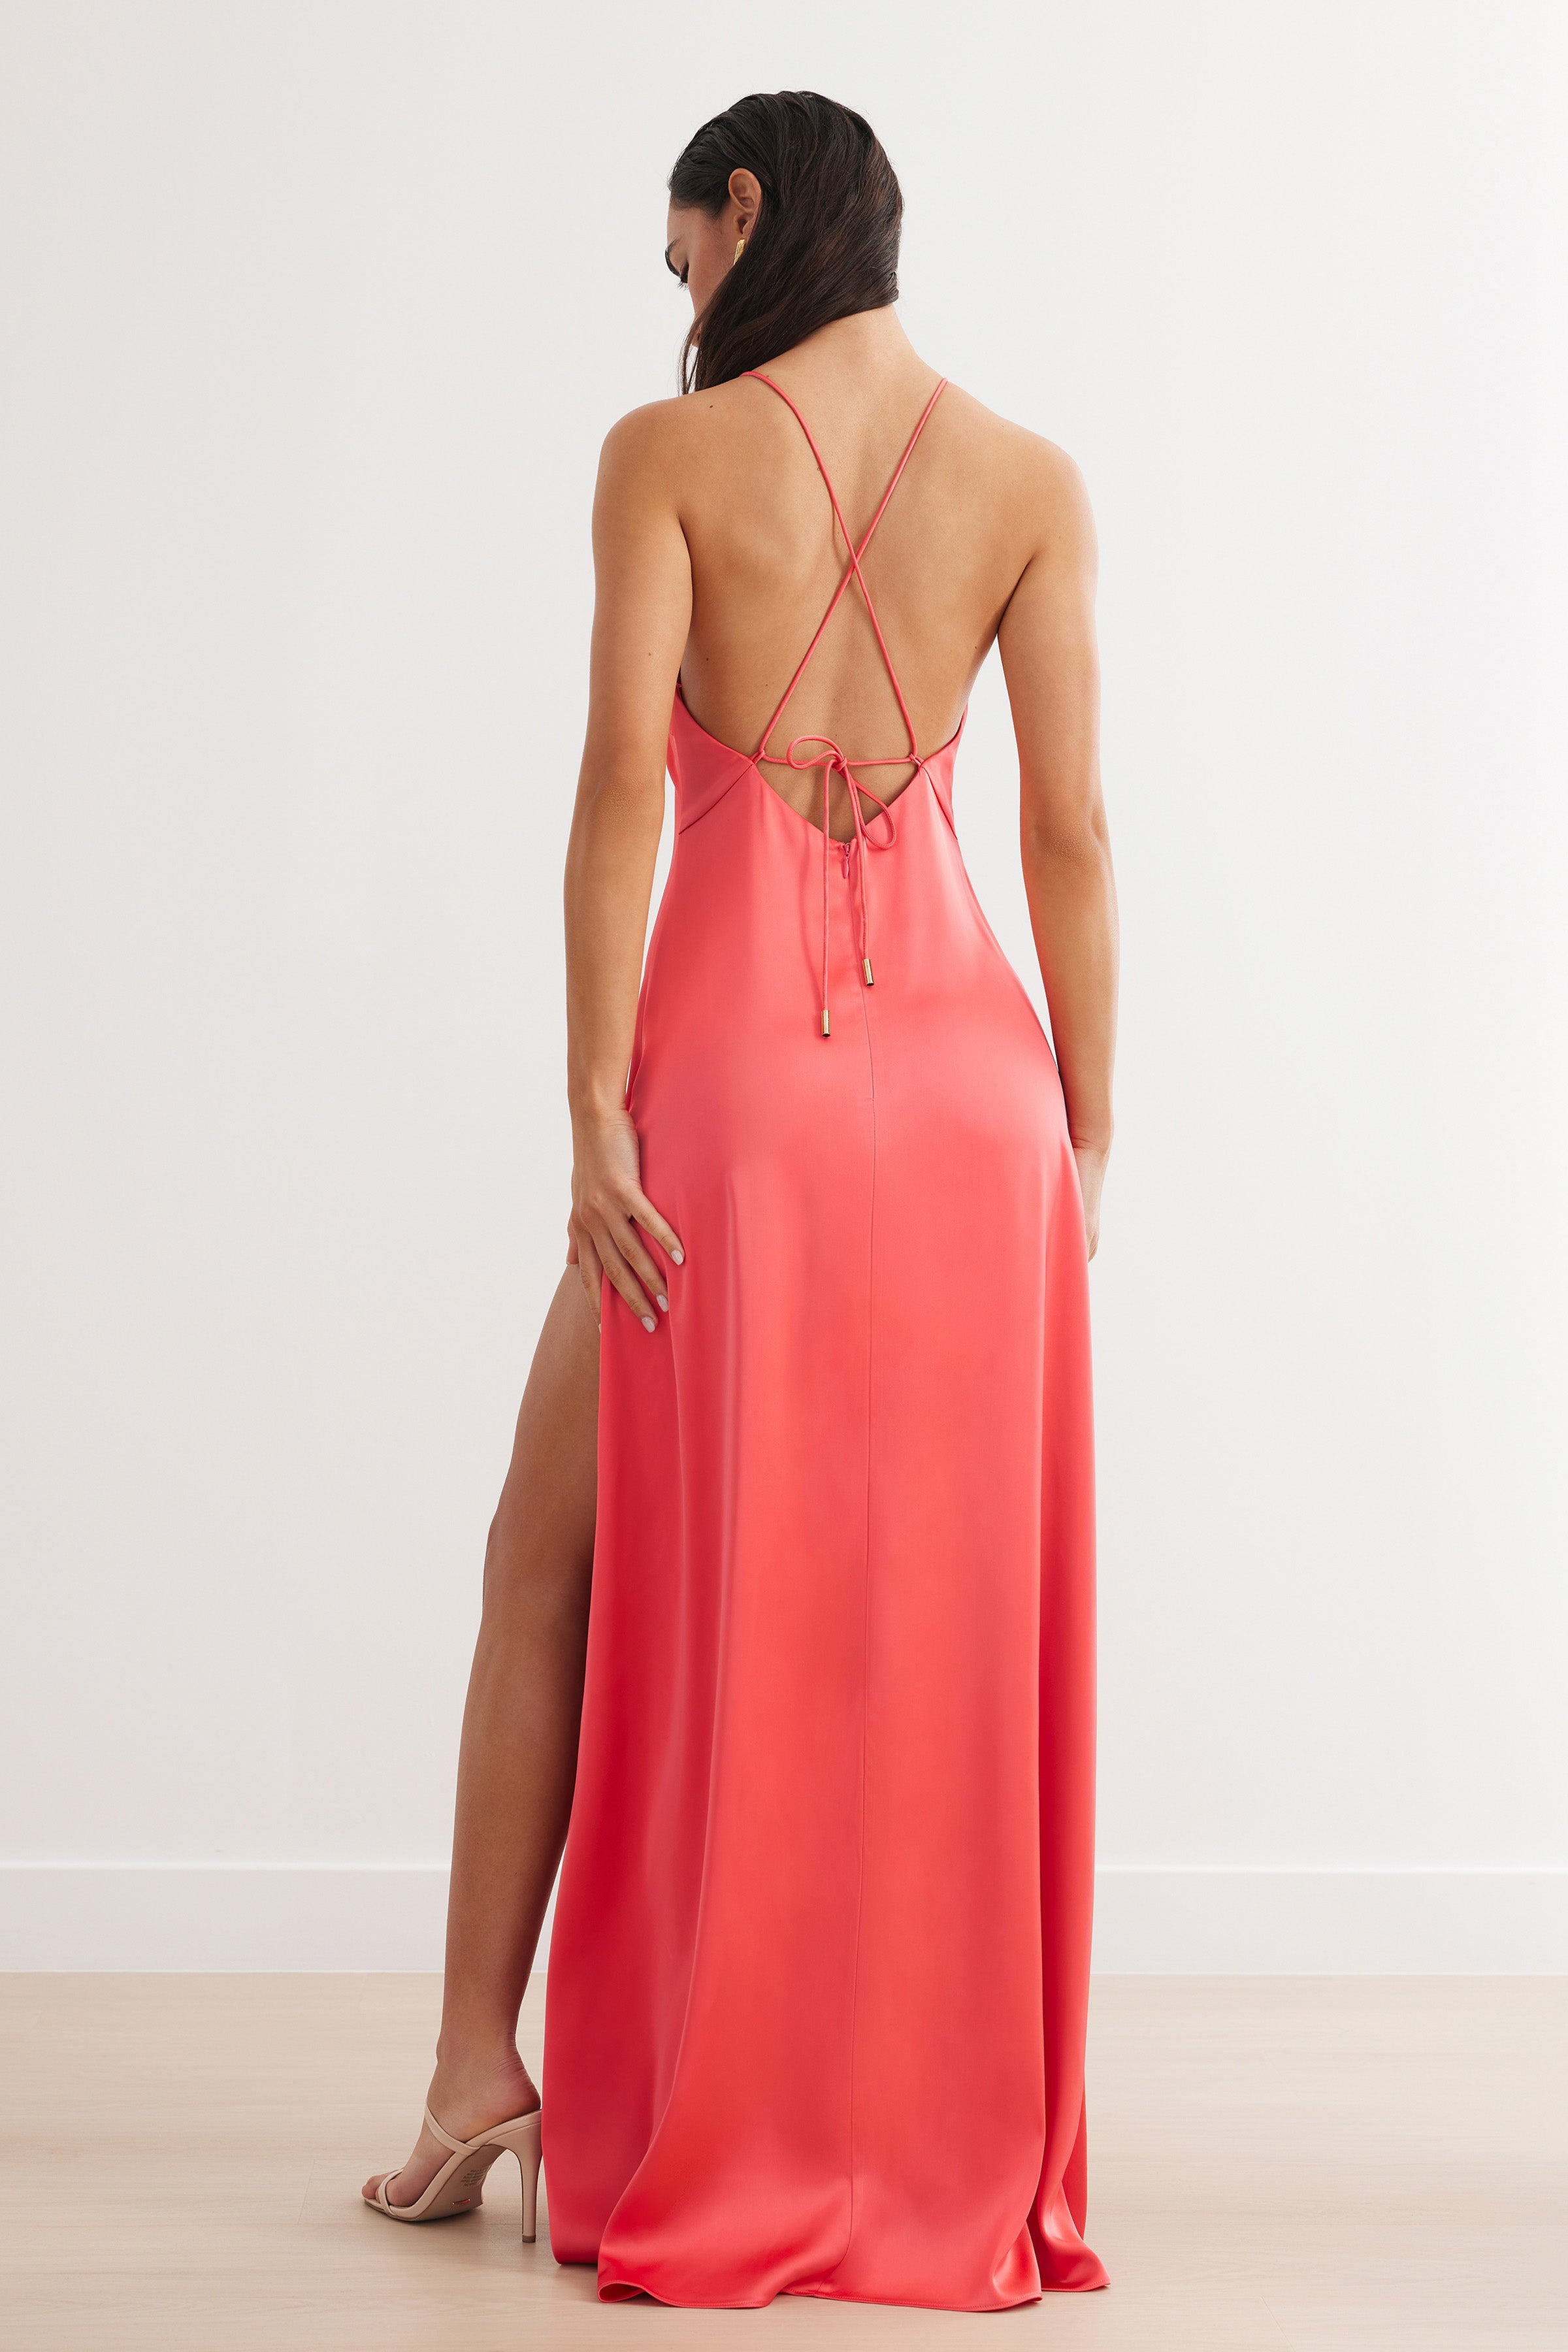 Bali Dress - Flamingo